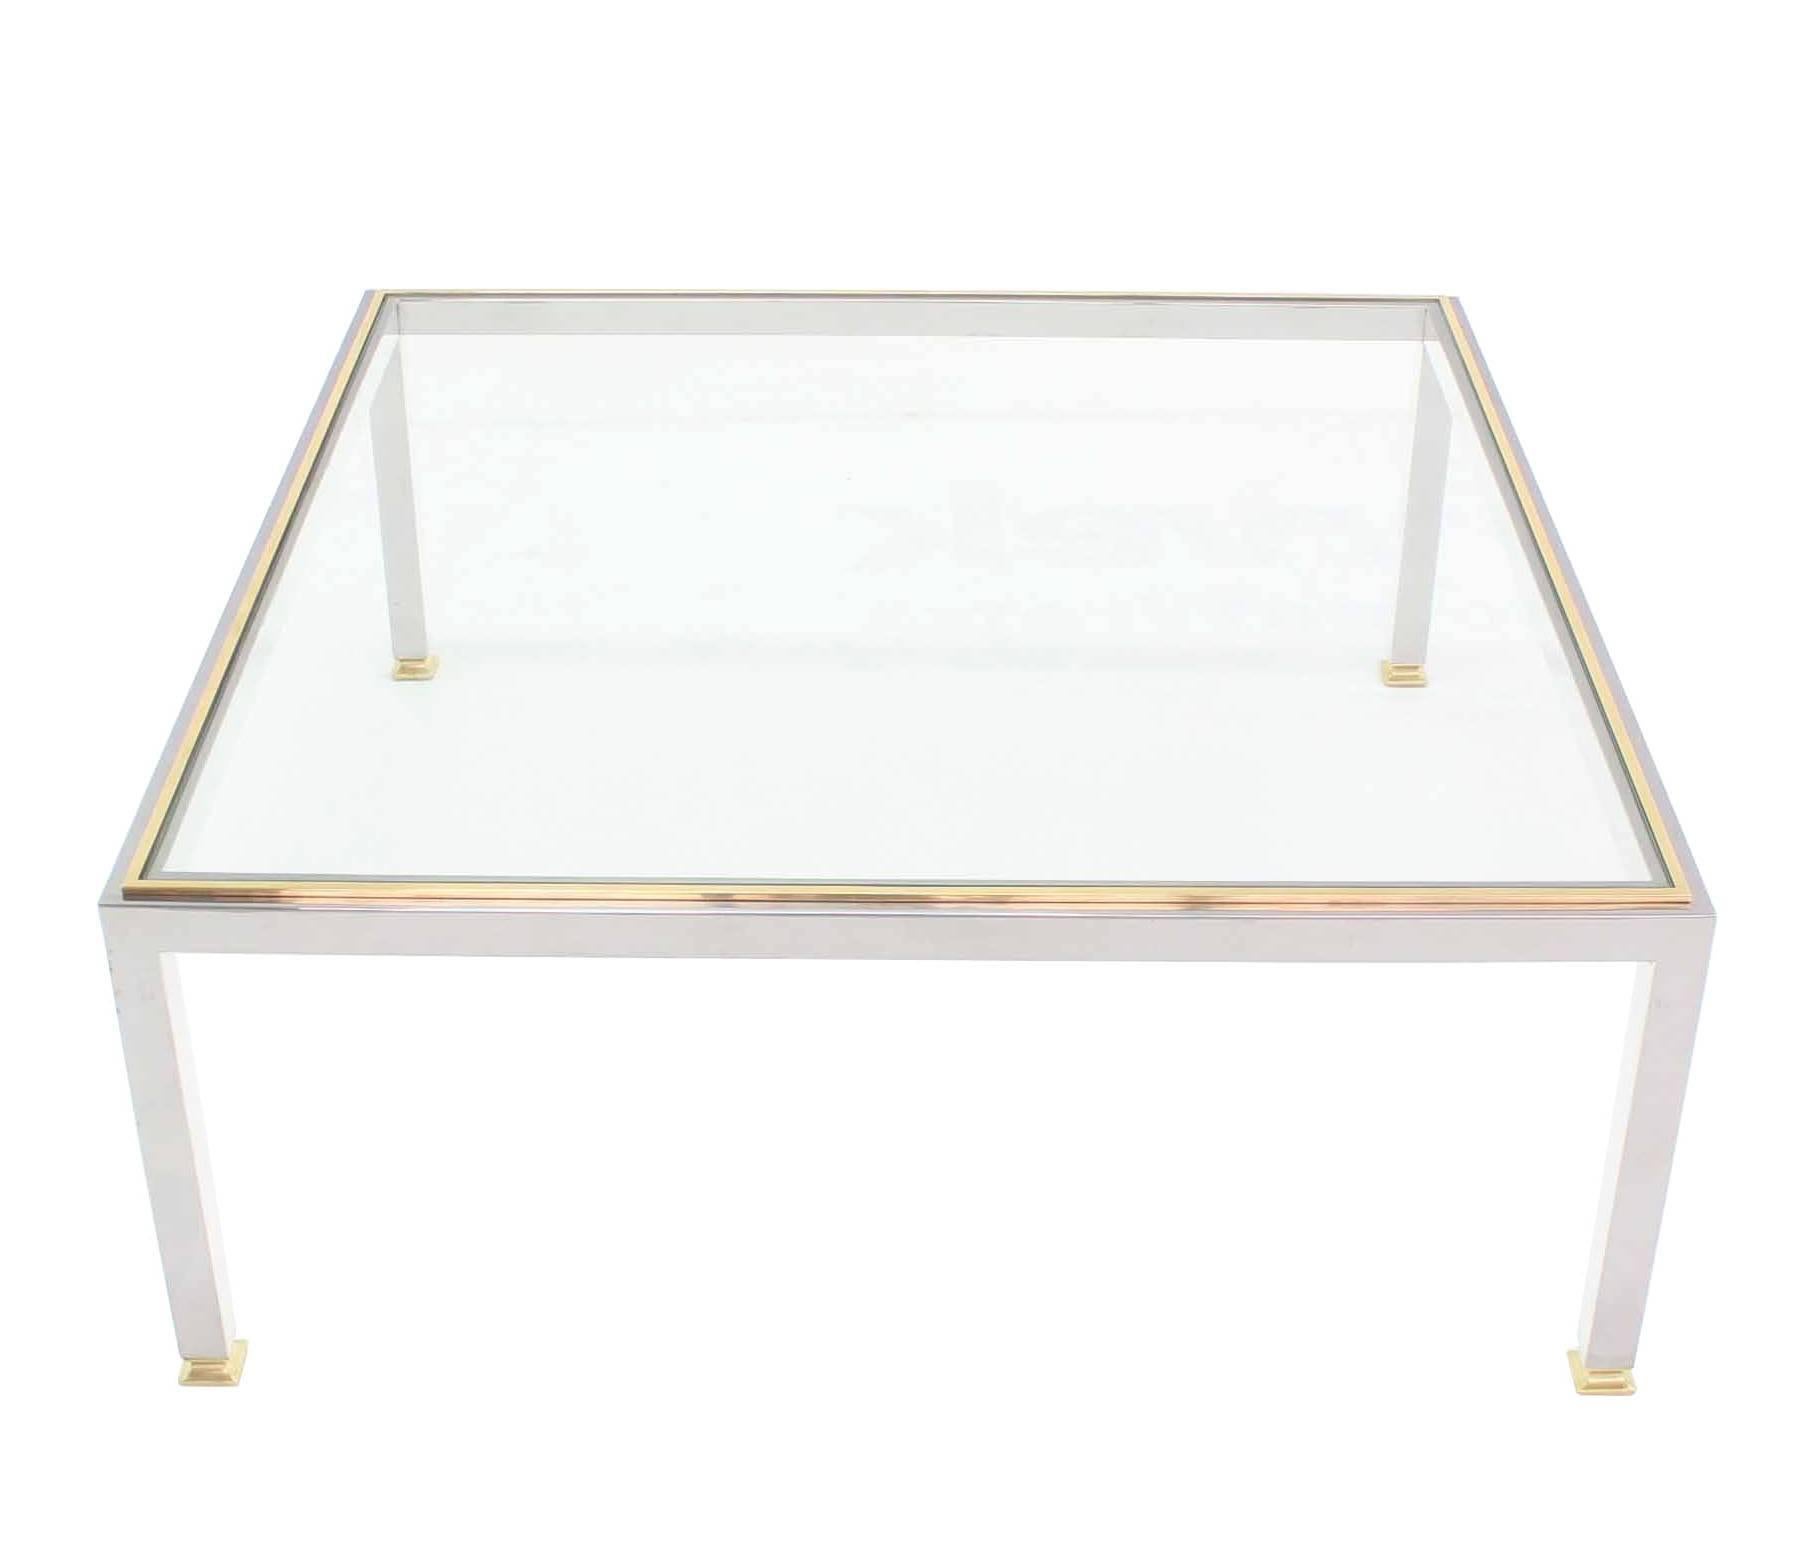 Very nice Mid-Century Modern square glass top coffee table, 42x42.